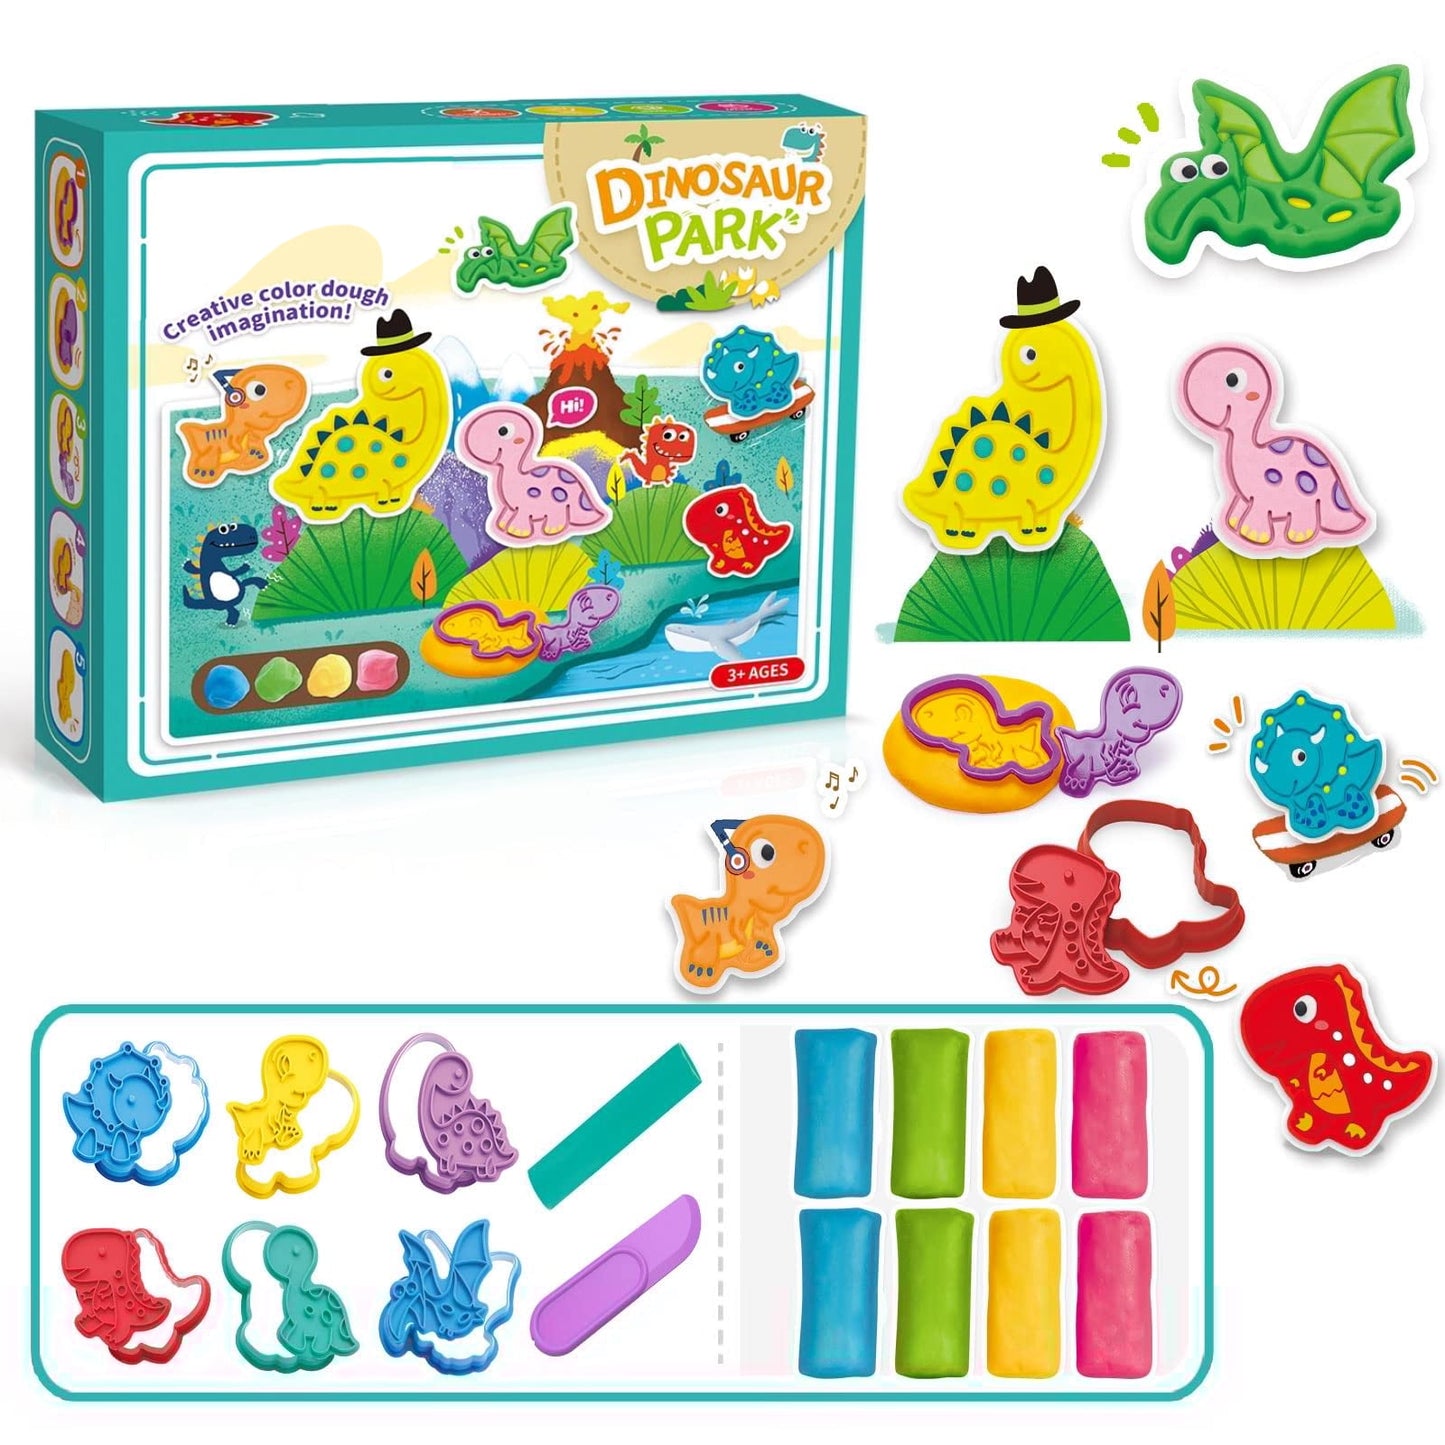 Color Play Dough Dinosaur World Creation Education Toys w/ Animals Pretend Playdough Sets for Kids